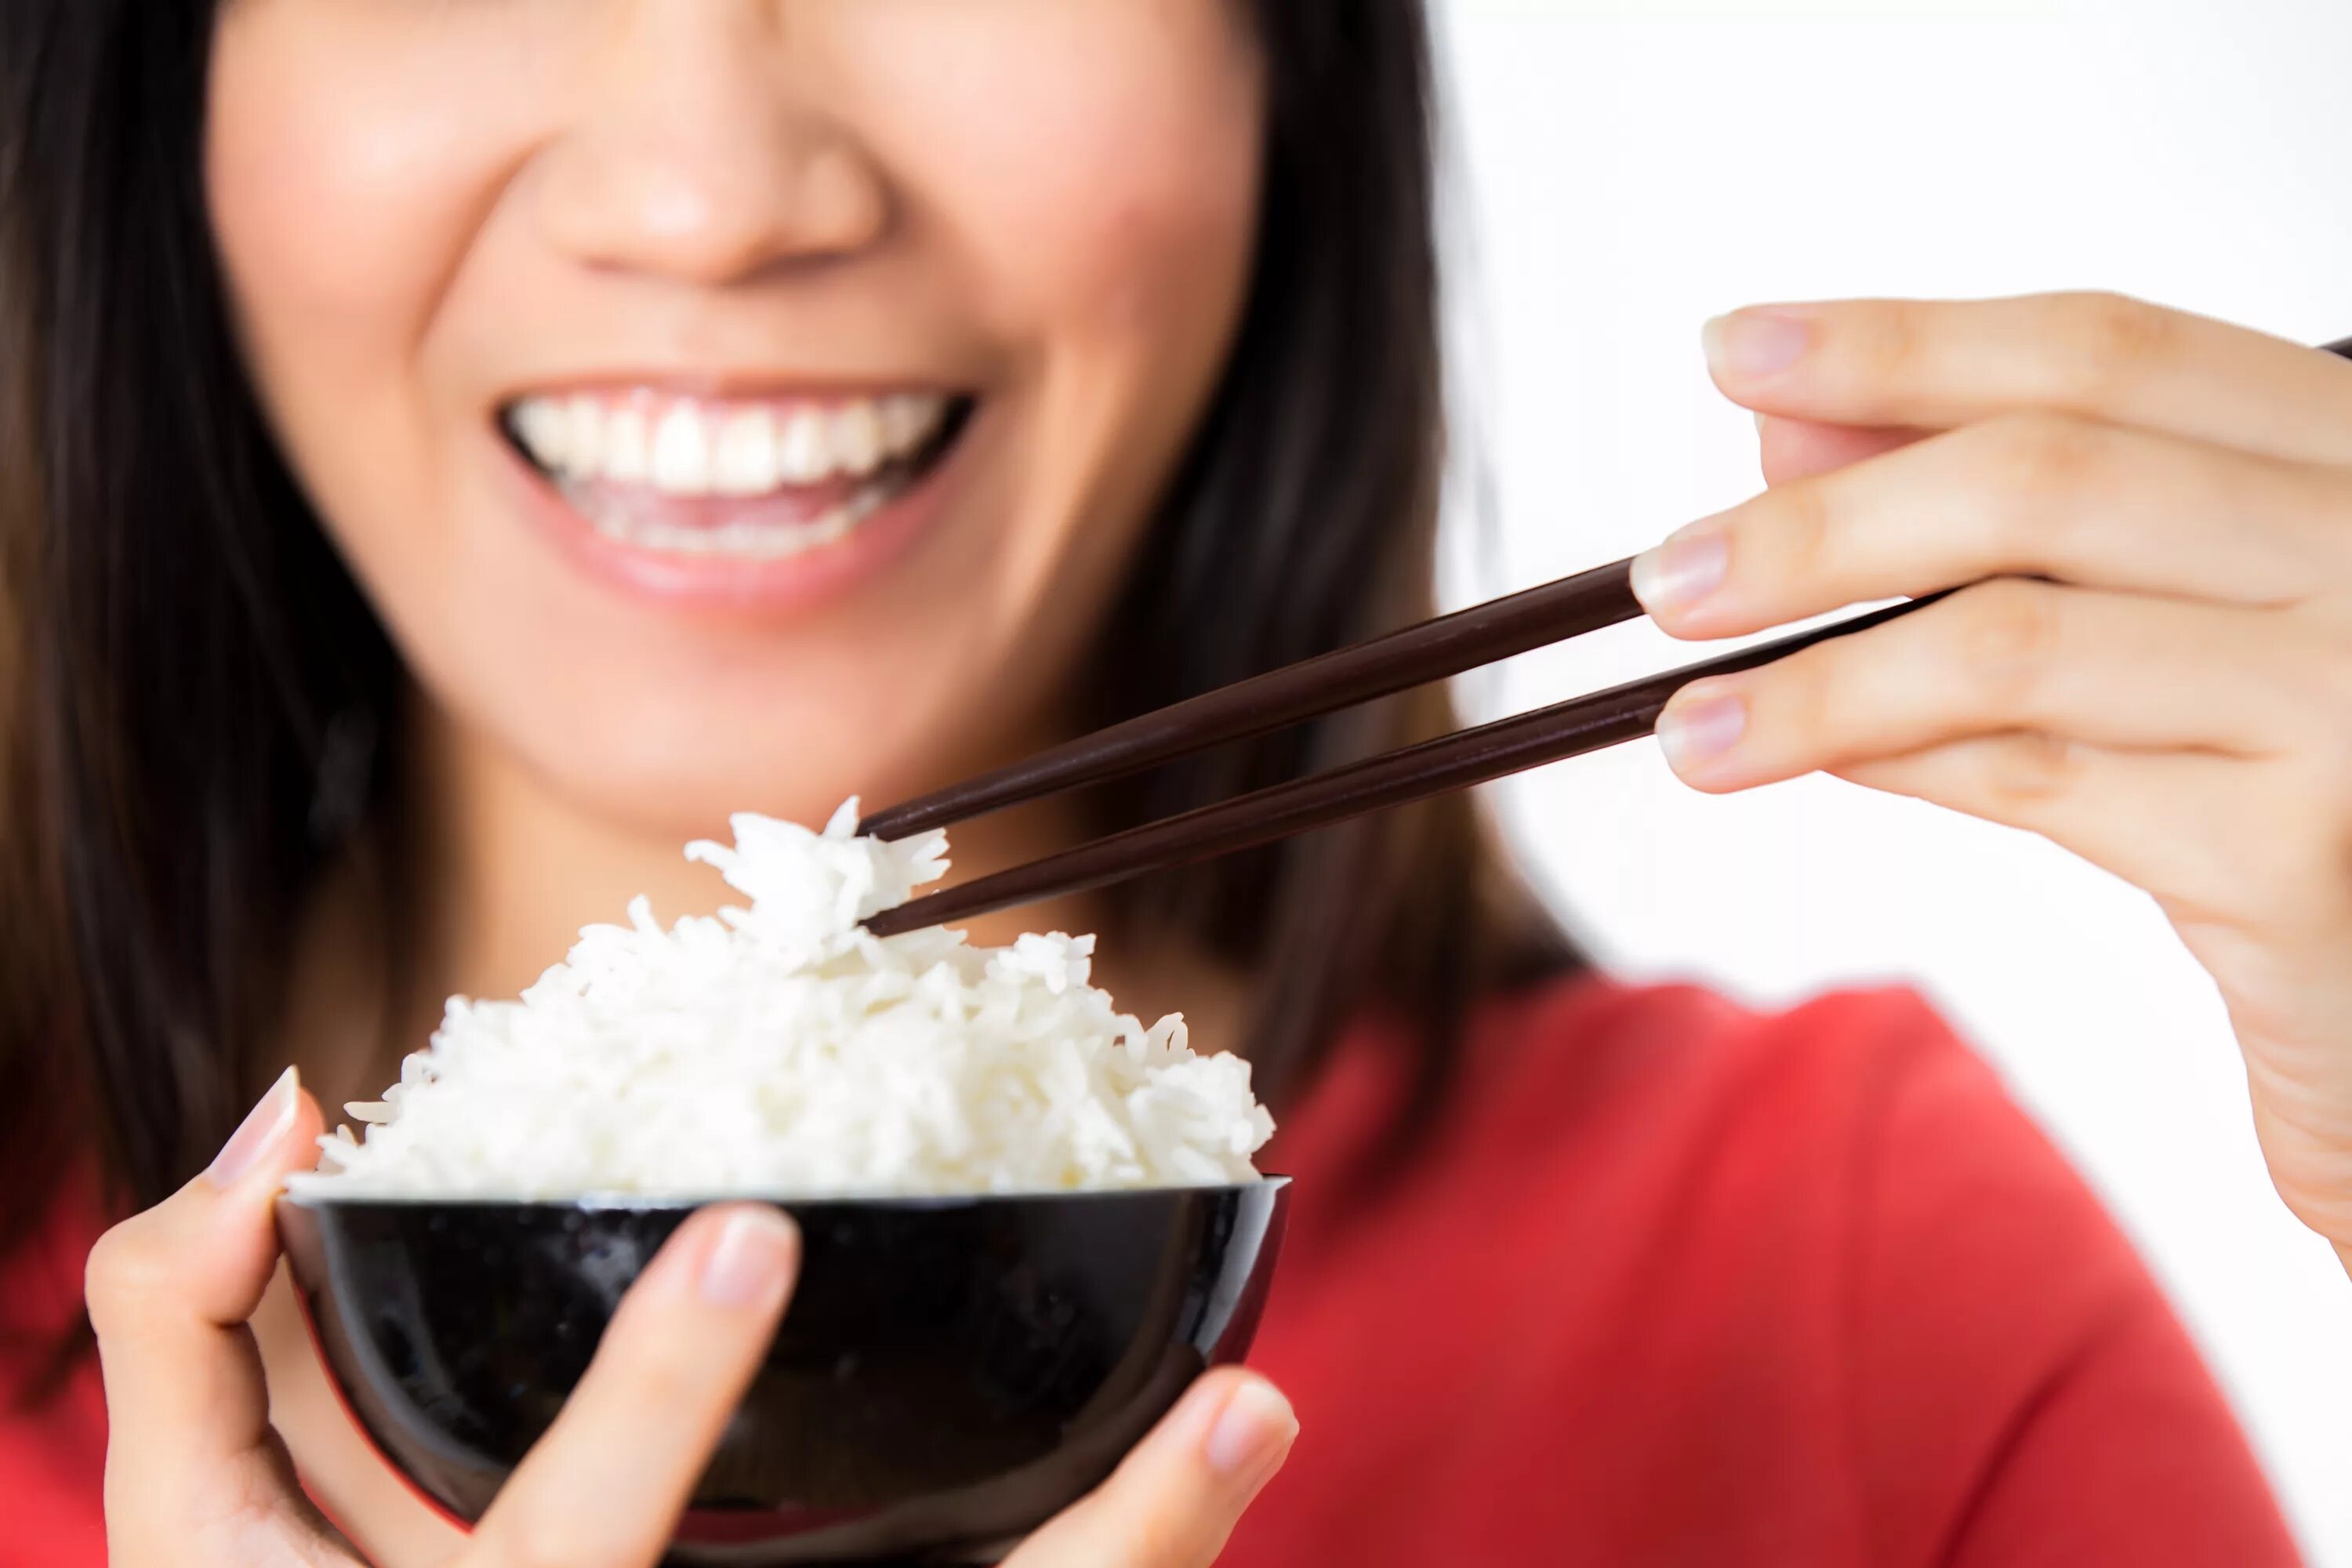 Like rice. Ест рис. Человек ест рис. Девушка ест рис. Рис едят палочками.